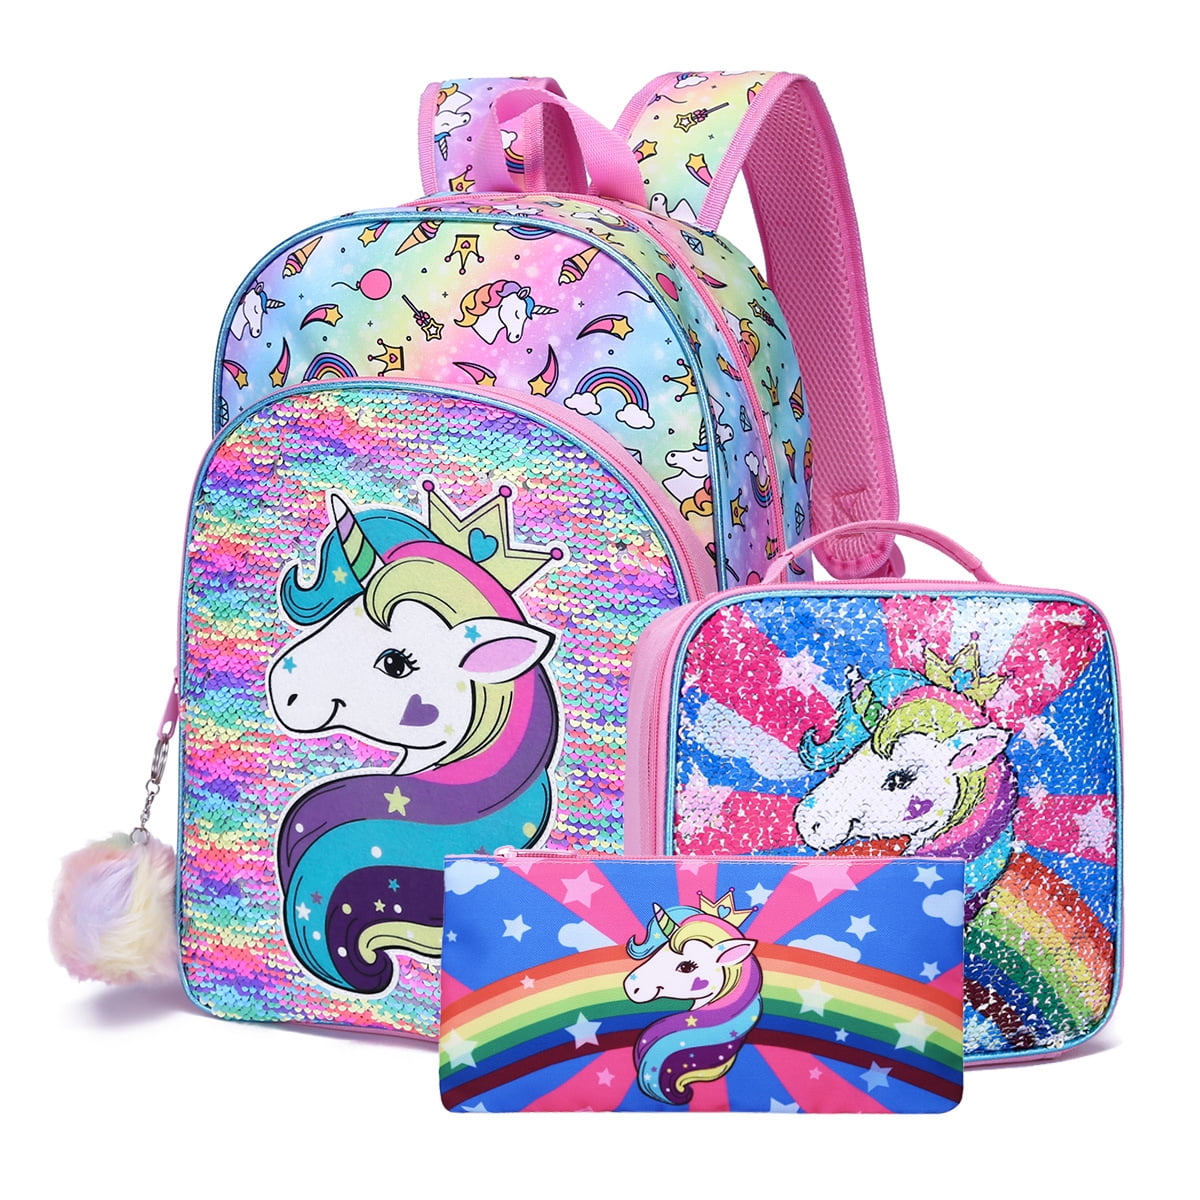 Petmoko 3PCS Unicorn school bag,Suitcase School Bag Set,Little Girls ...